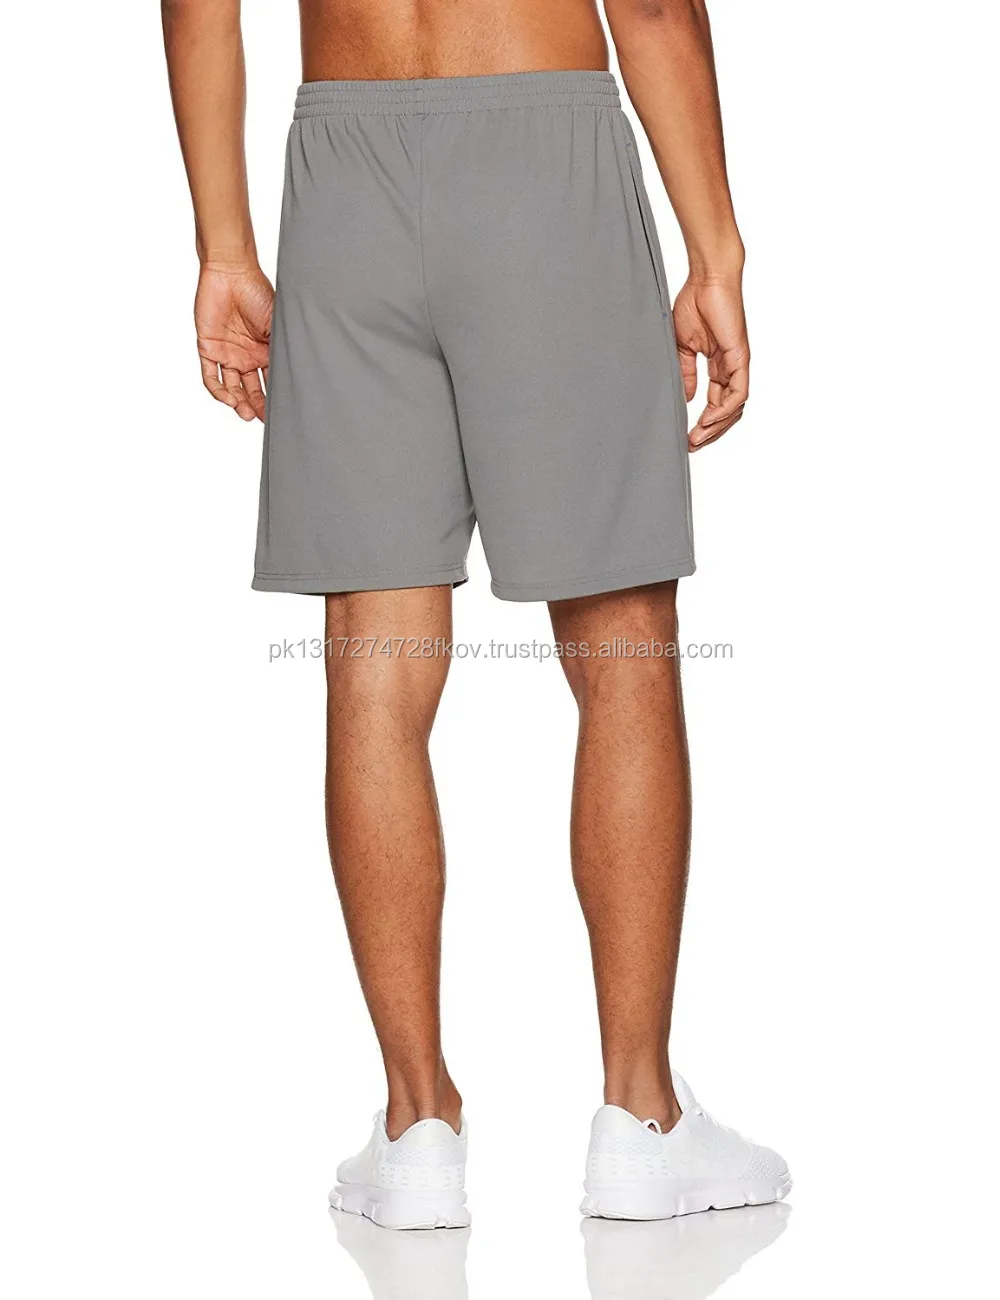 Active Gym Shorts Mens Shorts Grey Hot New Casual Print Customize Oem ...